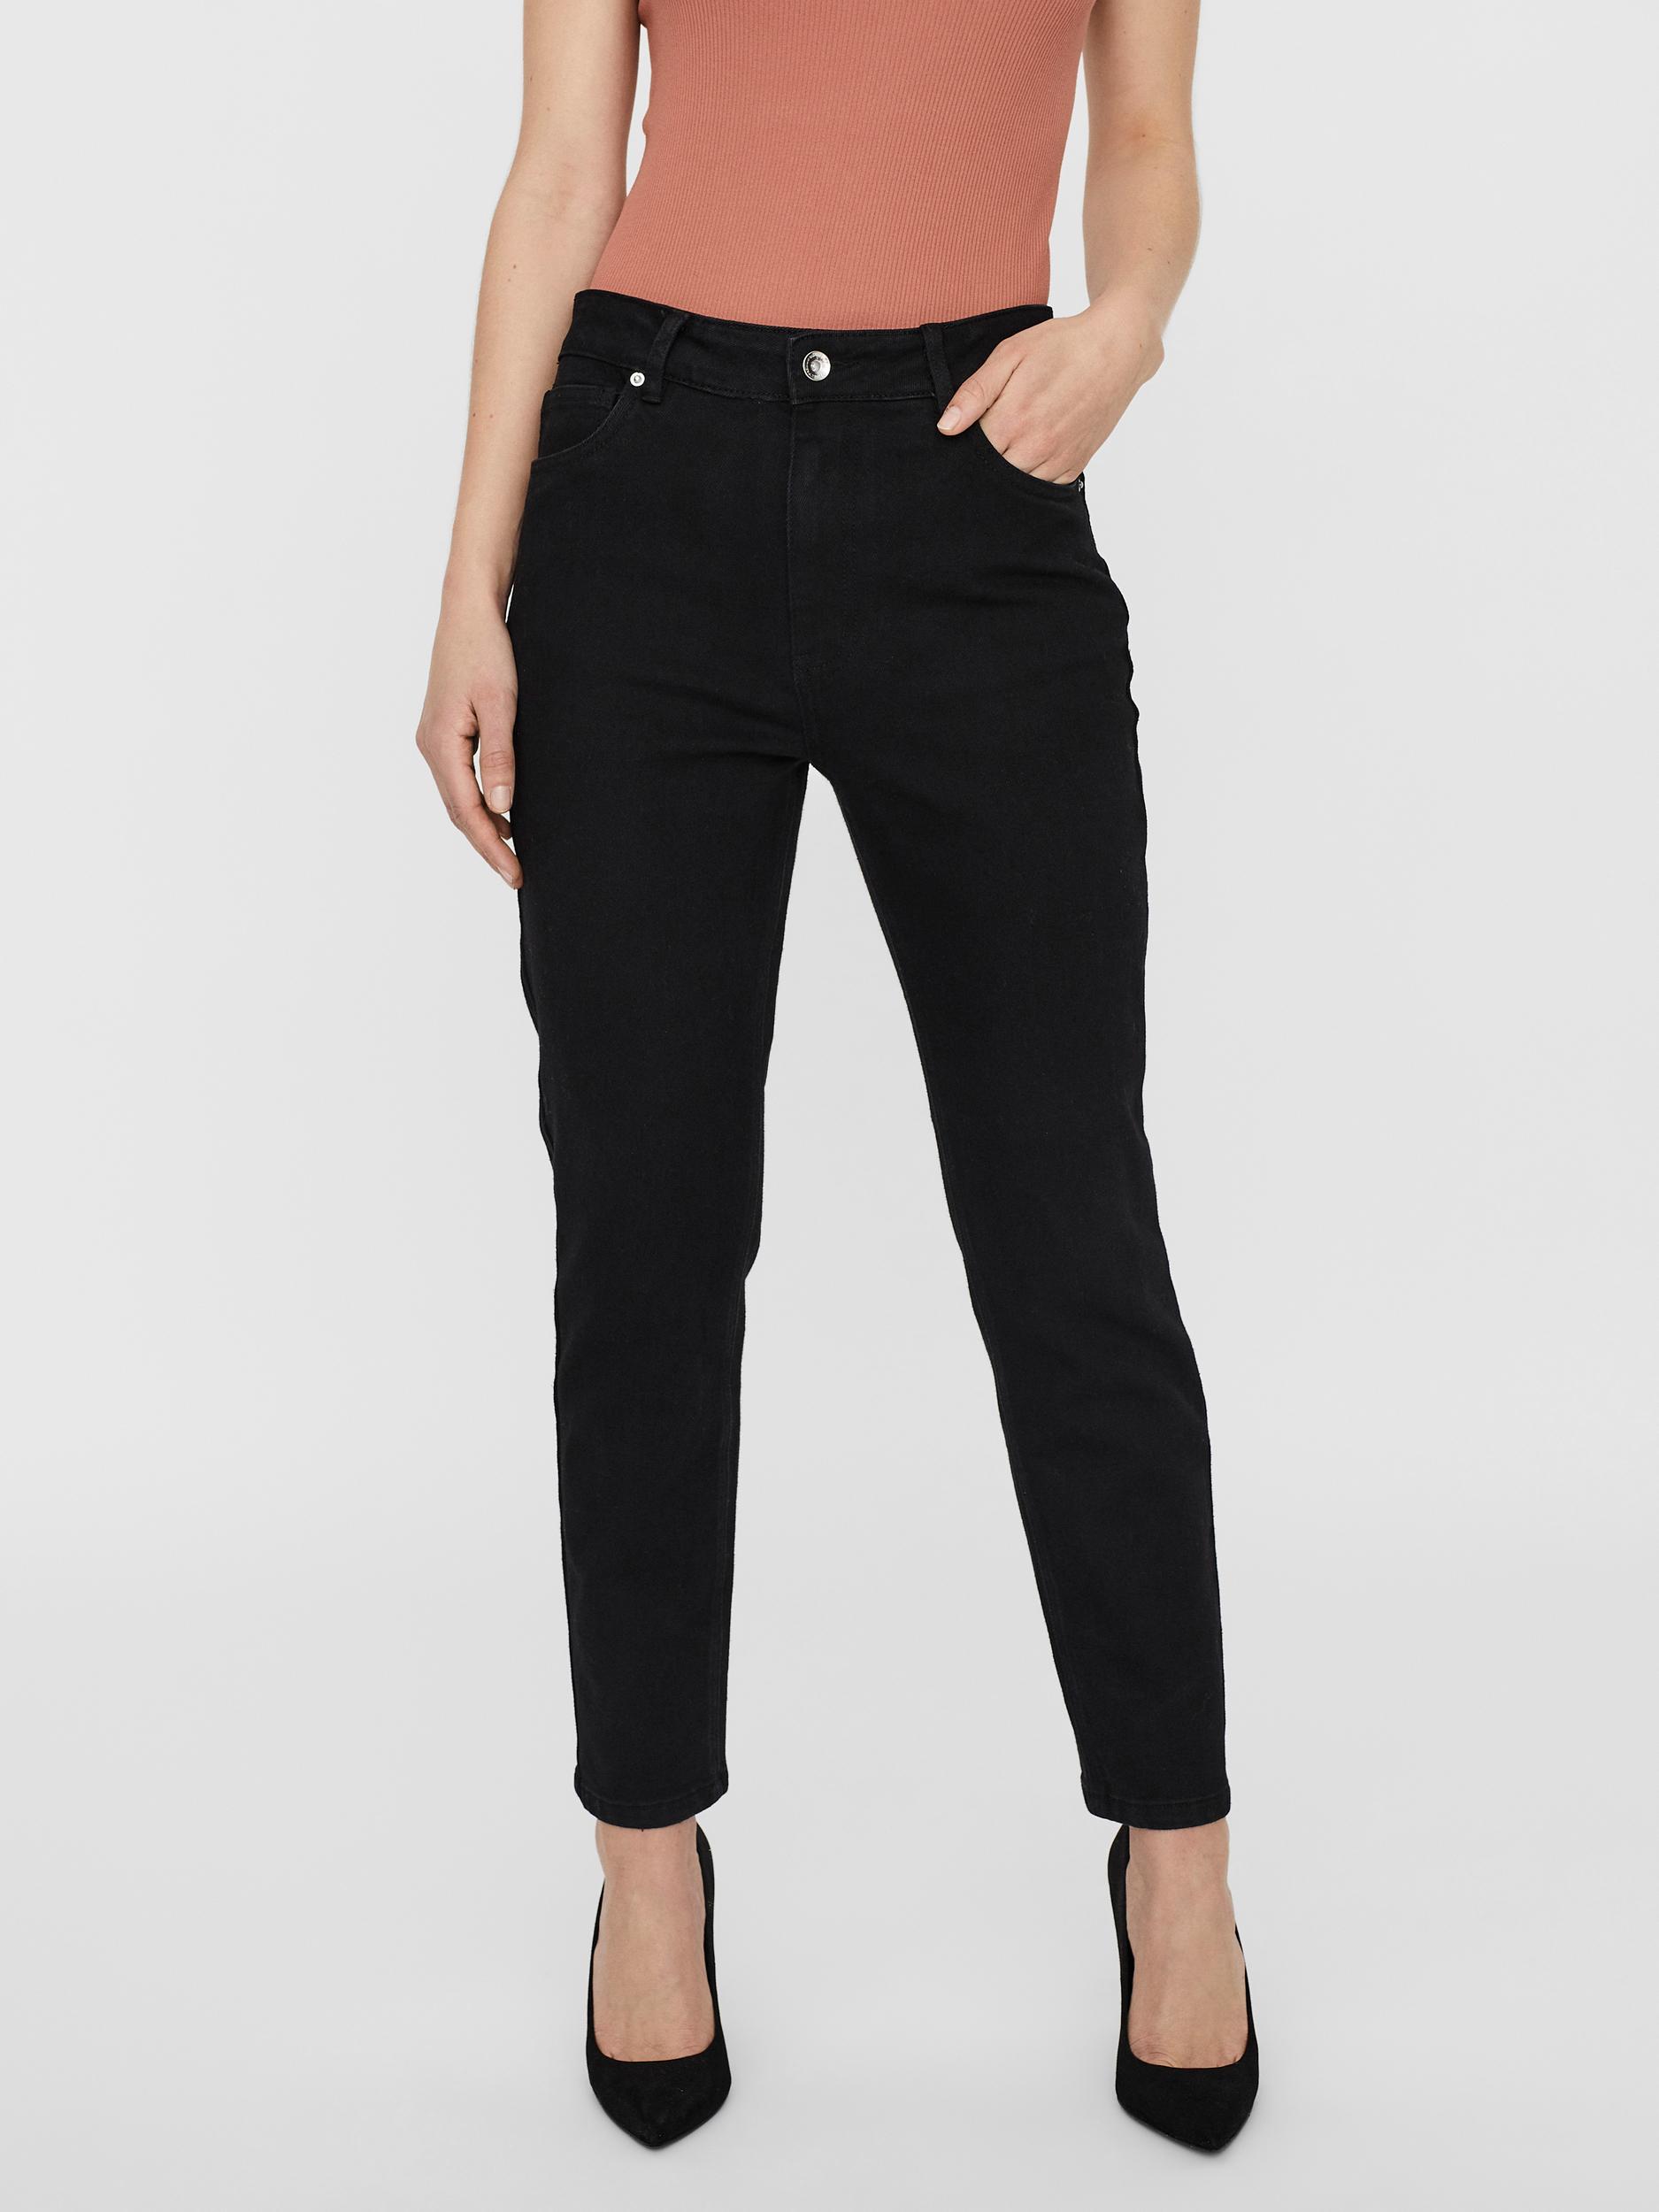 Brenda high waist straight fit jeans, BLACK, large